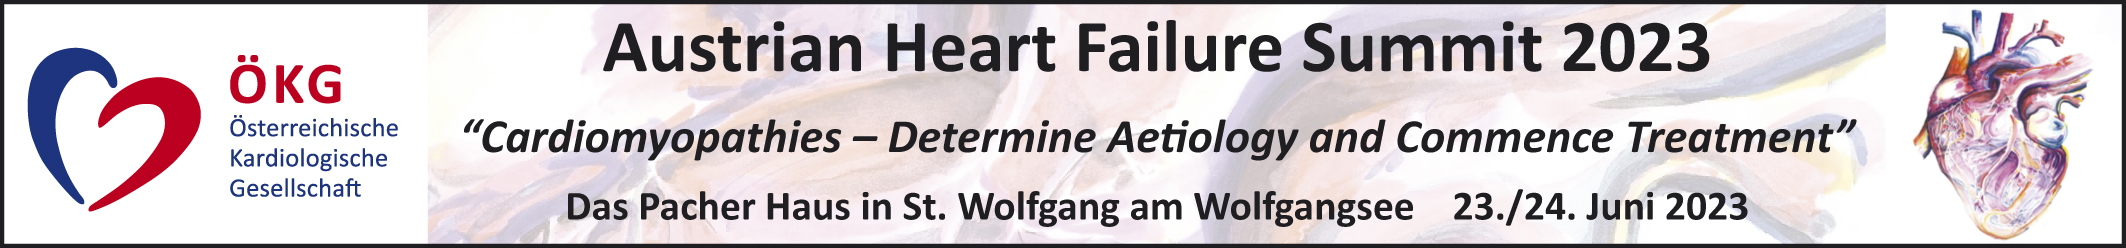 Austrian Heart Failure Summit 2023